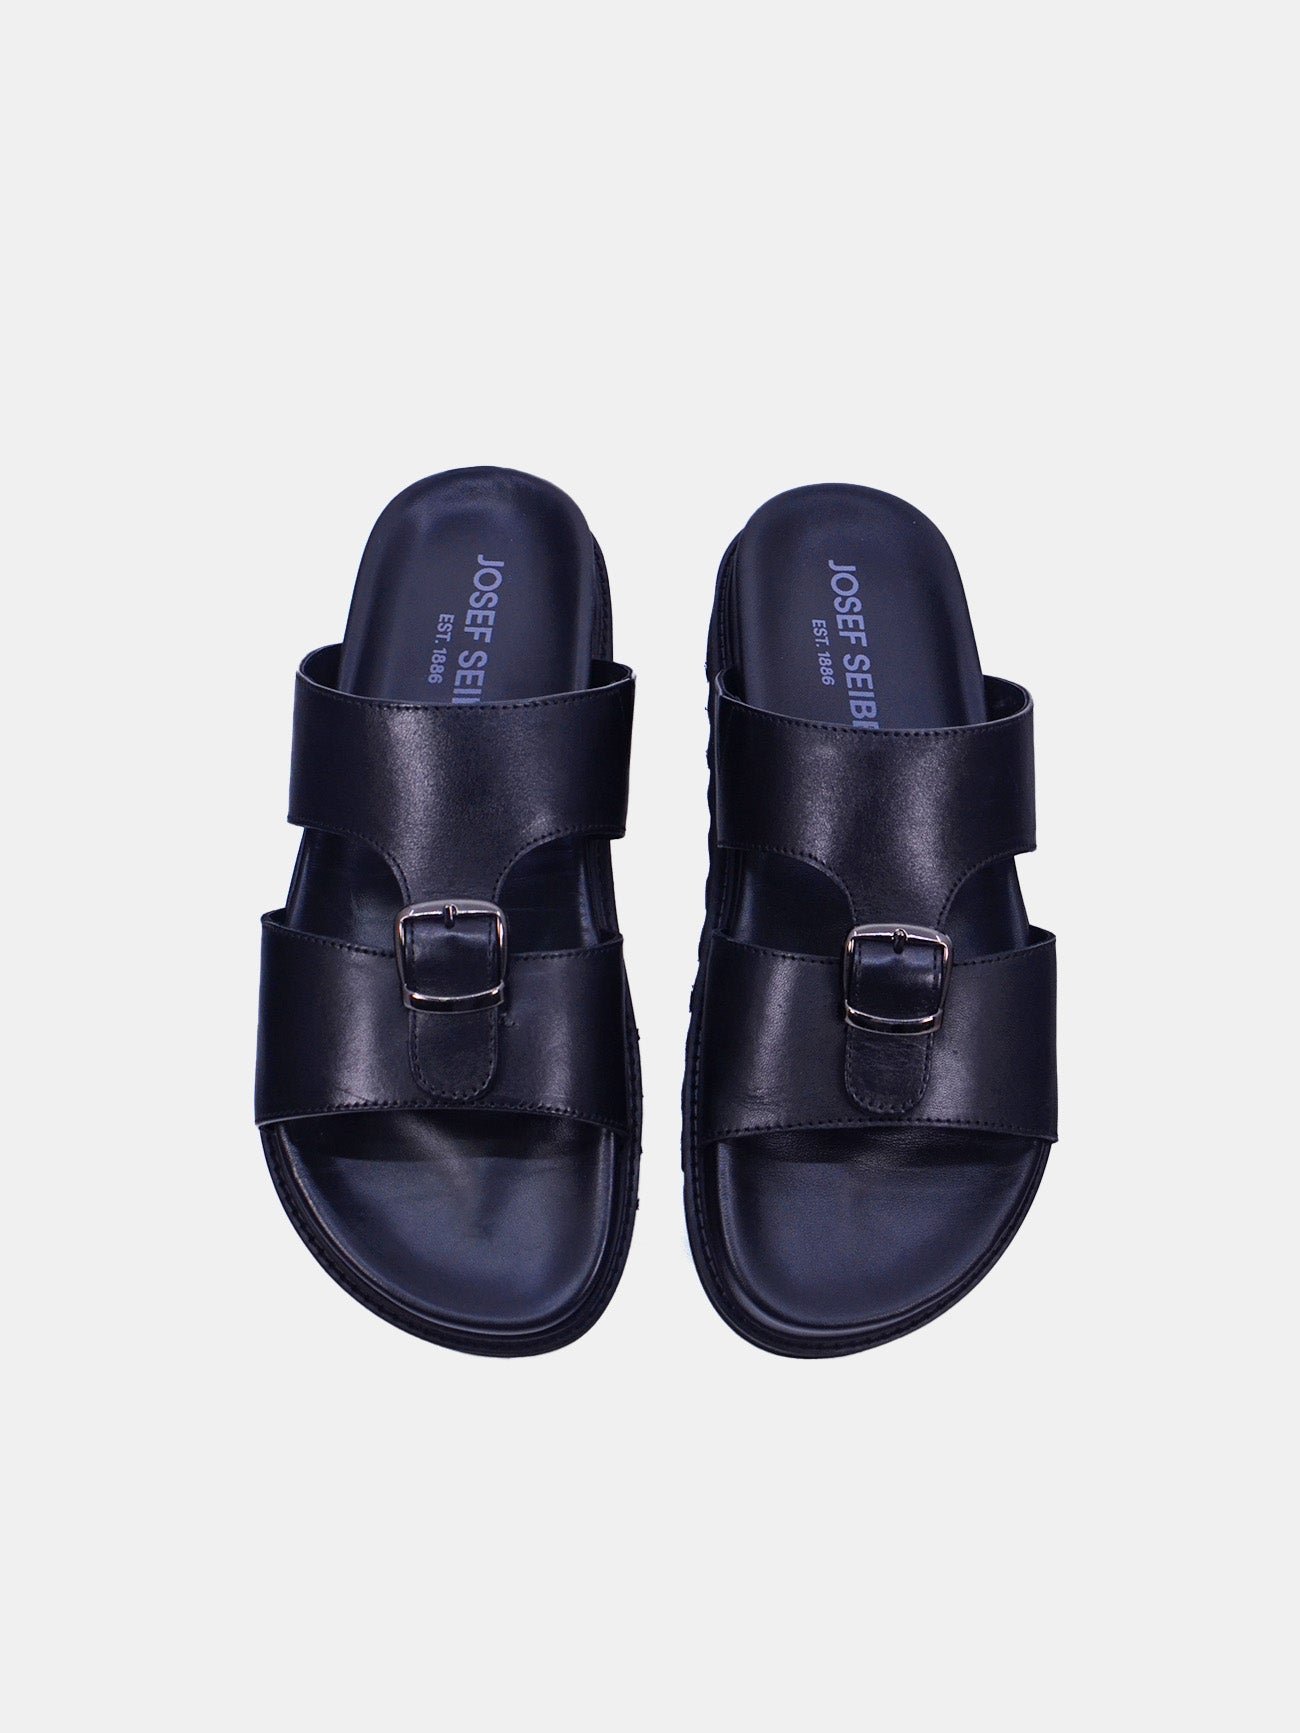 Josef Seibel 58403 Men's Casual Sandals #color_Black